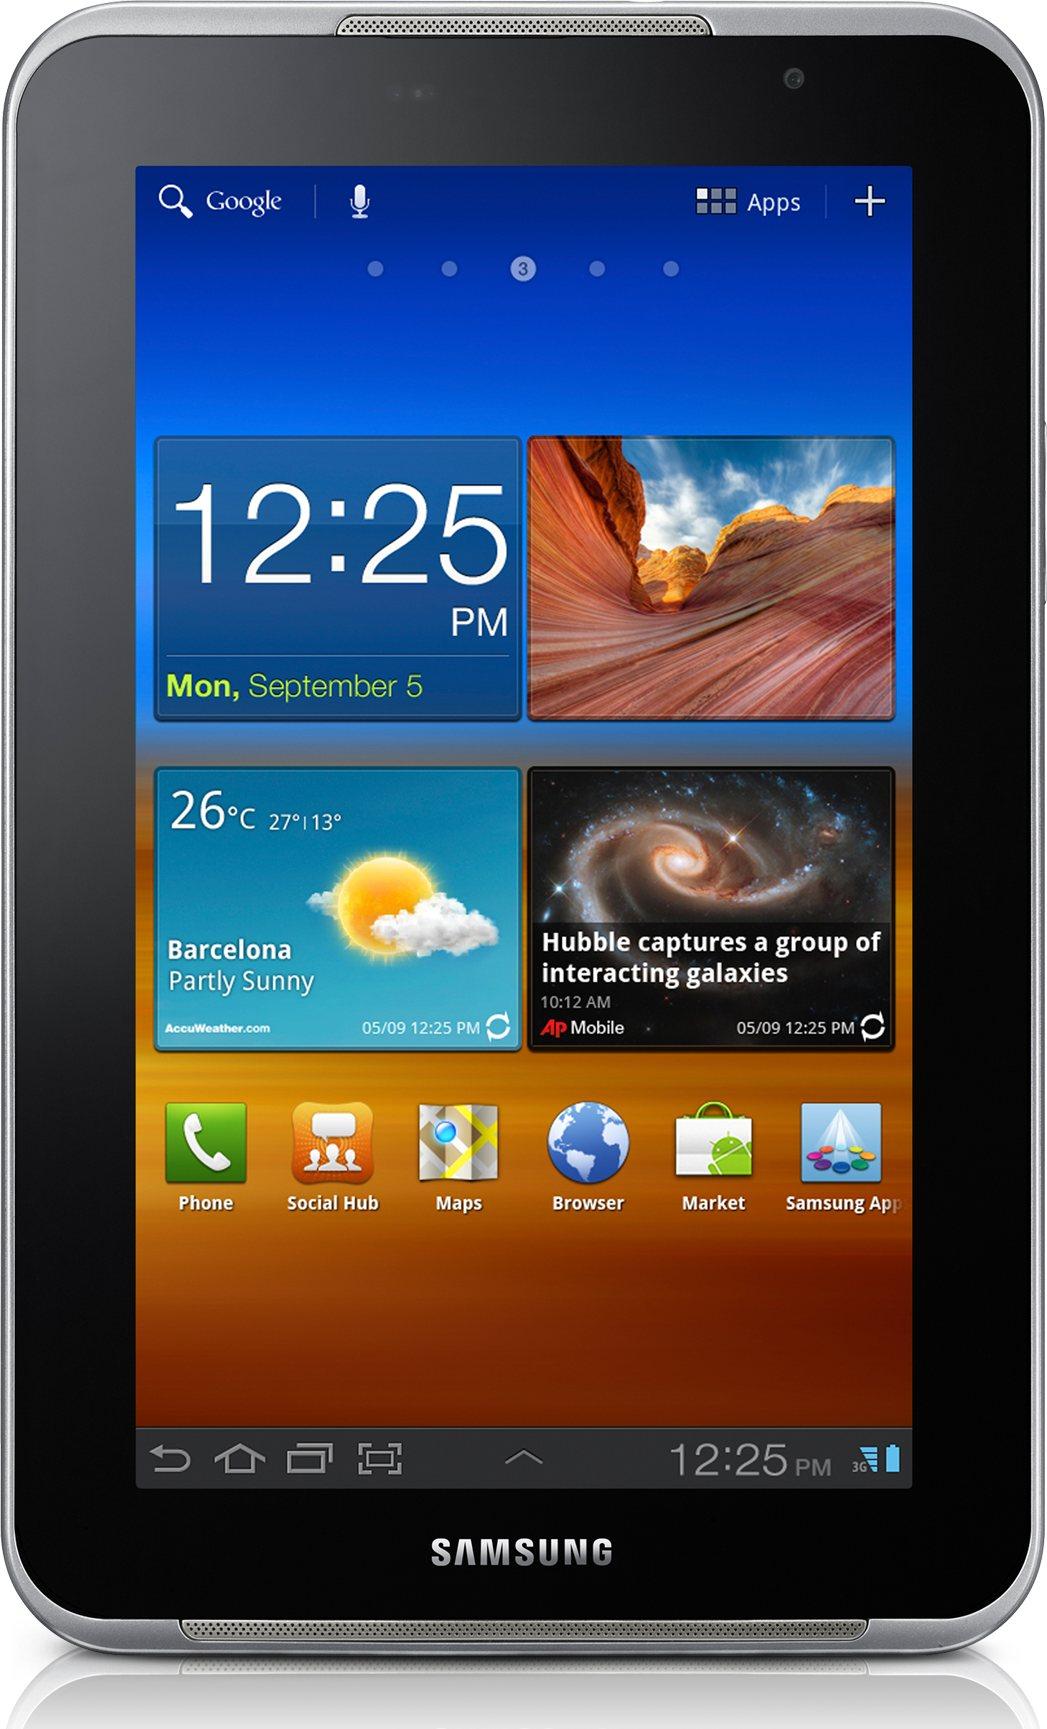 Galaxy Tab 7.0 Plus (WiFi) GT-P6210